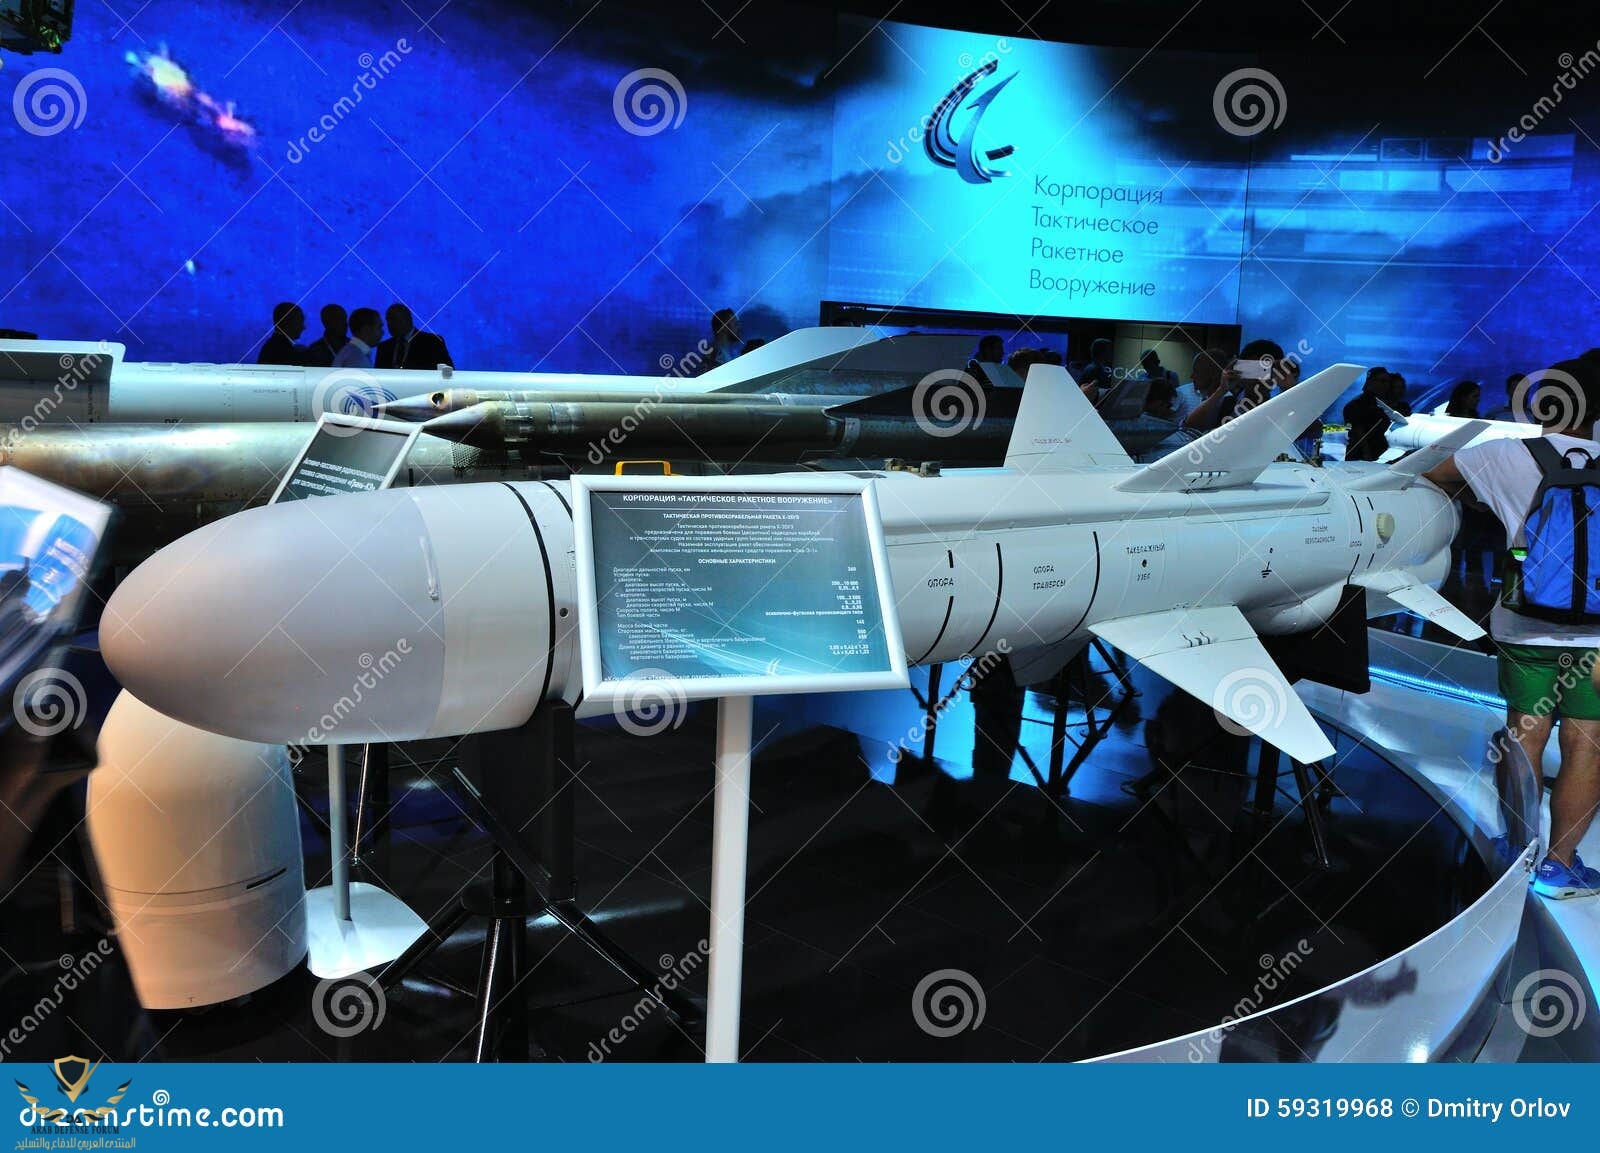 moscow-russia-aug-subsonic-anti-ship-missile-kh-u-as-kayak-presented-th-maks-international-avi...jpg